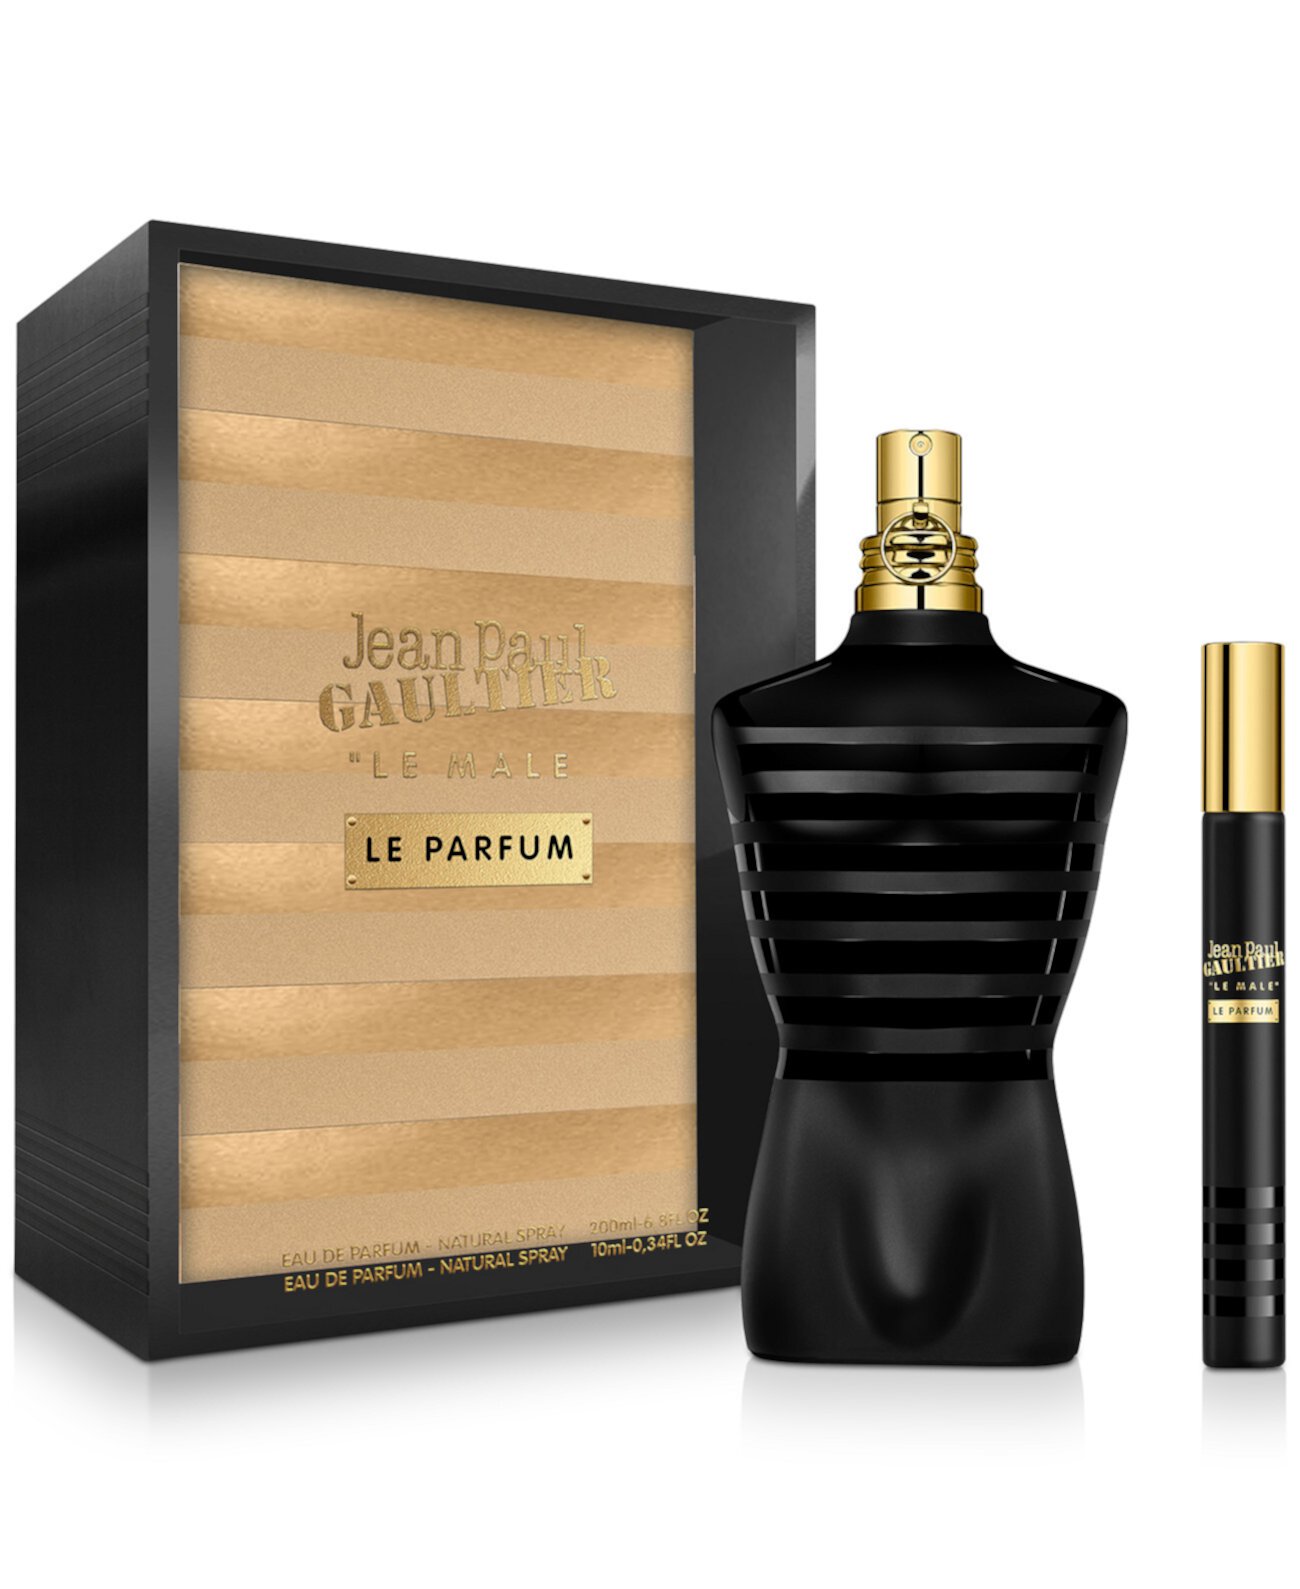 Мужские 2 шт. Подарочный набор Le Male Le Parfum Jean Paul Gaultier